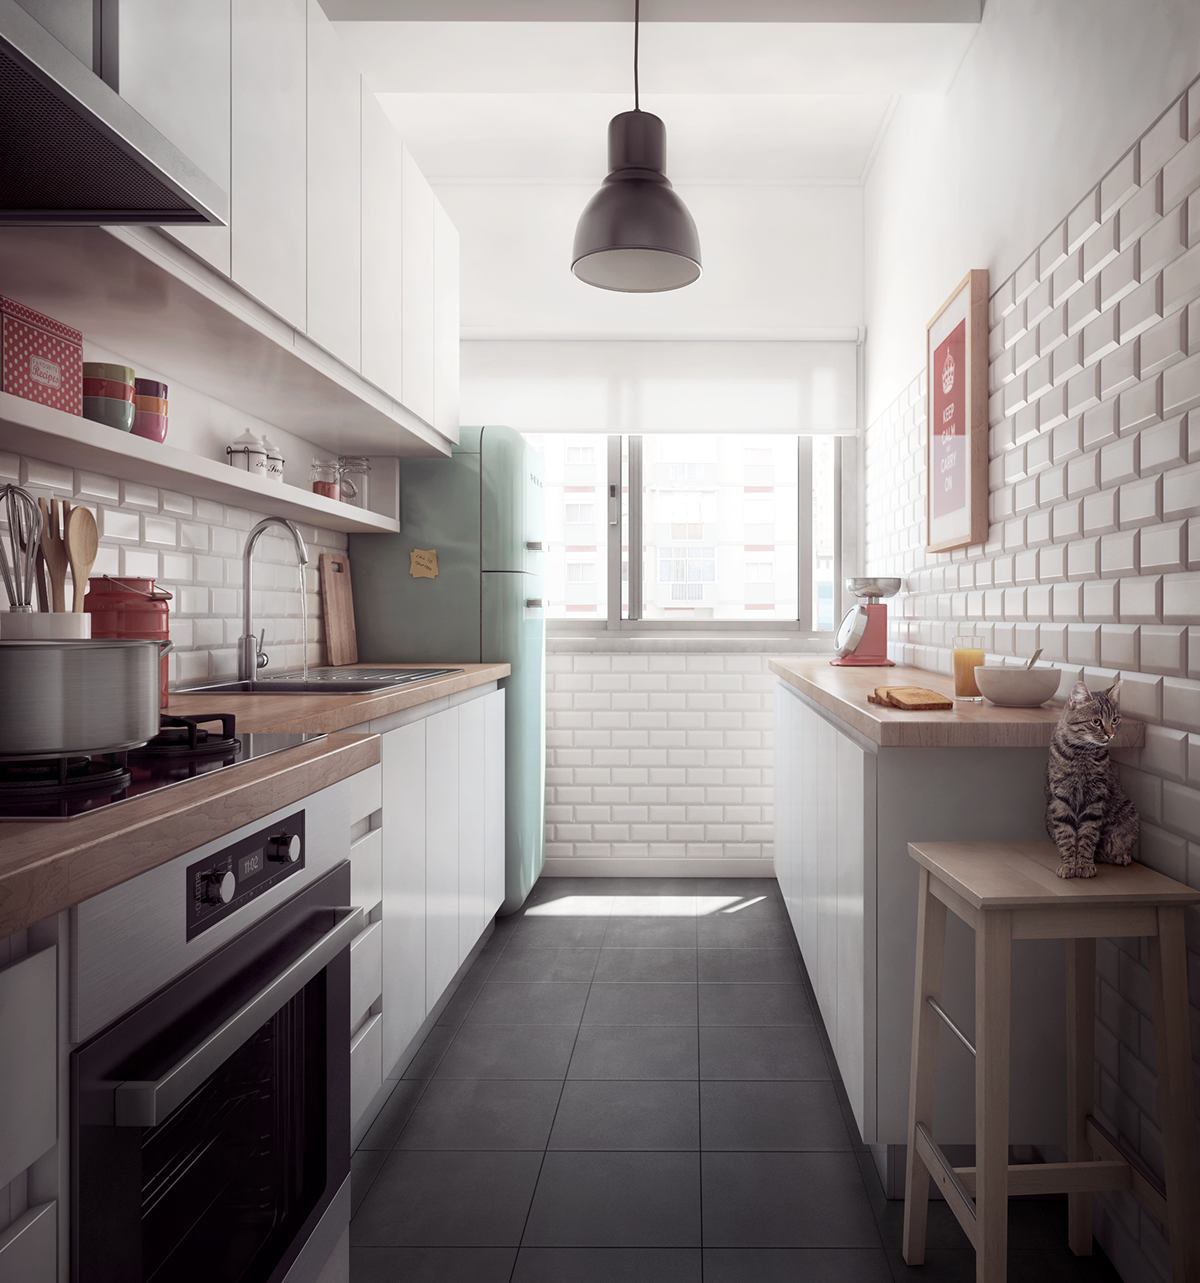 kitchen CG Interior MAX vray photoshop modeling apmira Cat Render